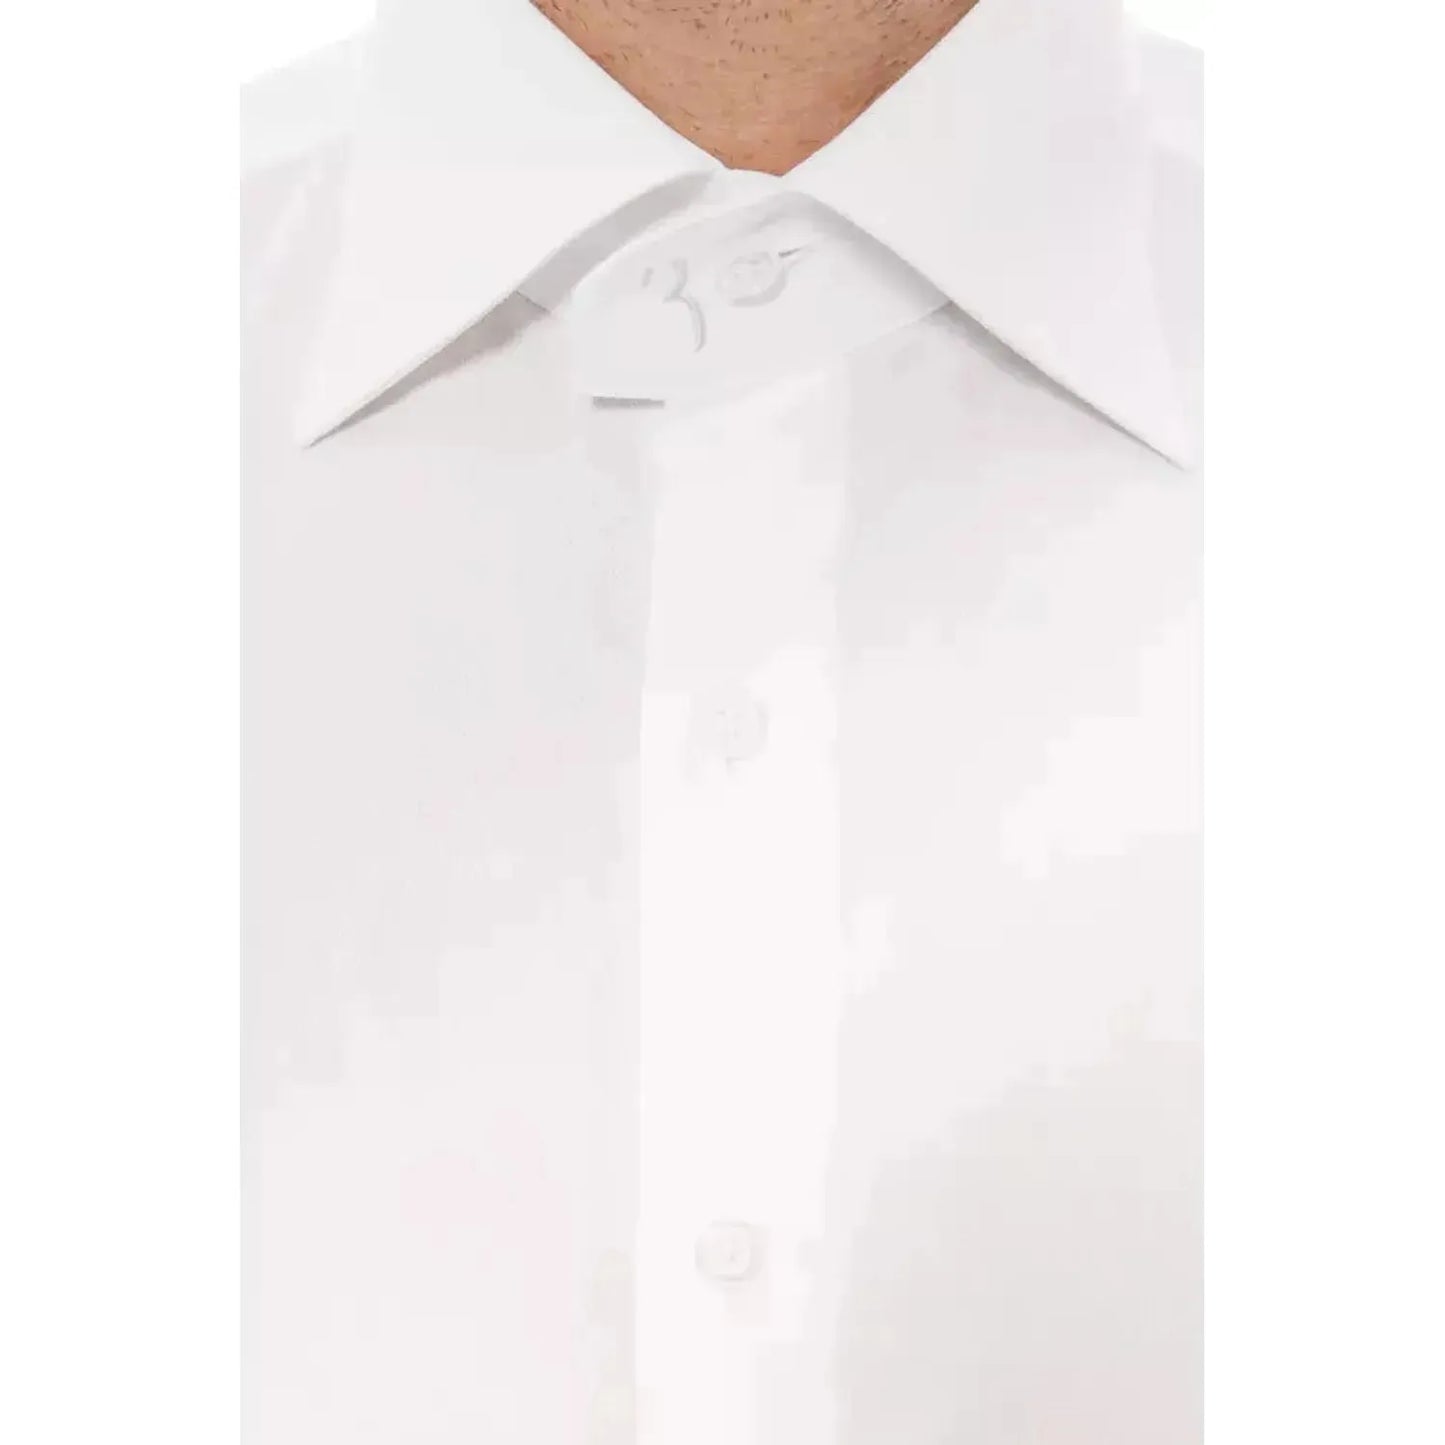 Billionaire Italian Couture Elegant Monogrammed White Cotton Shirt white-cotton-shirt-30 stock_product_image_10501_1278507476-13-1c28ce69-d84.webp